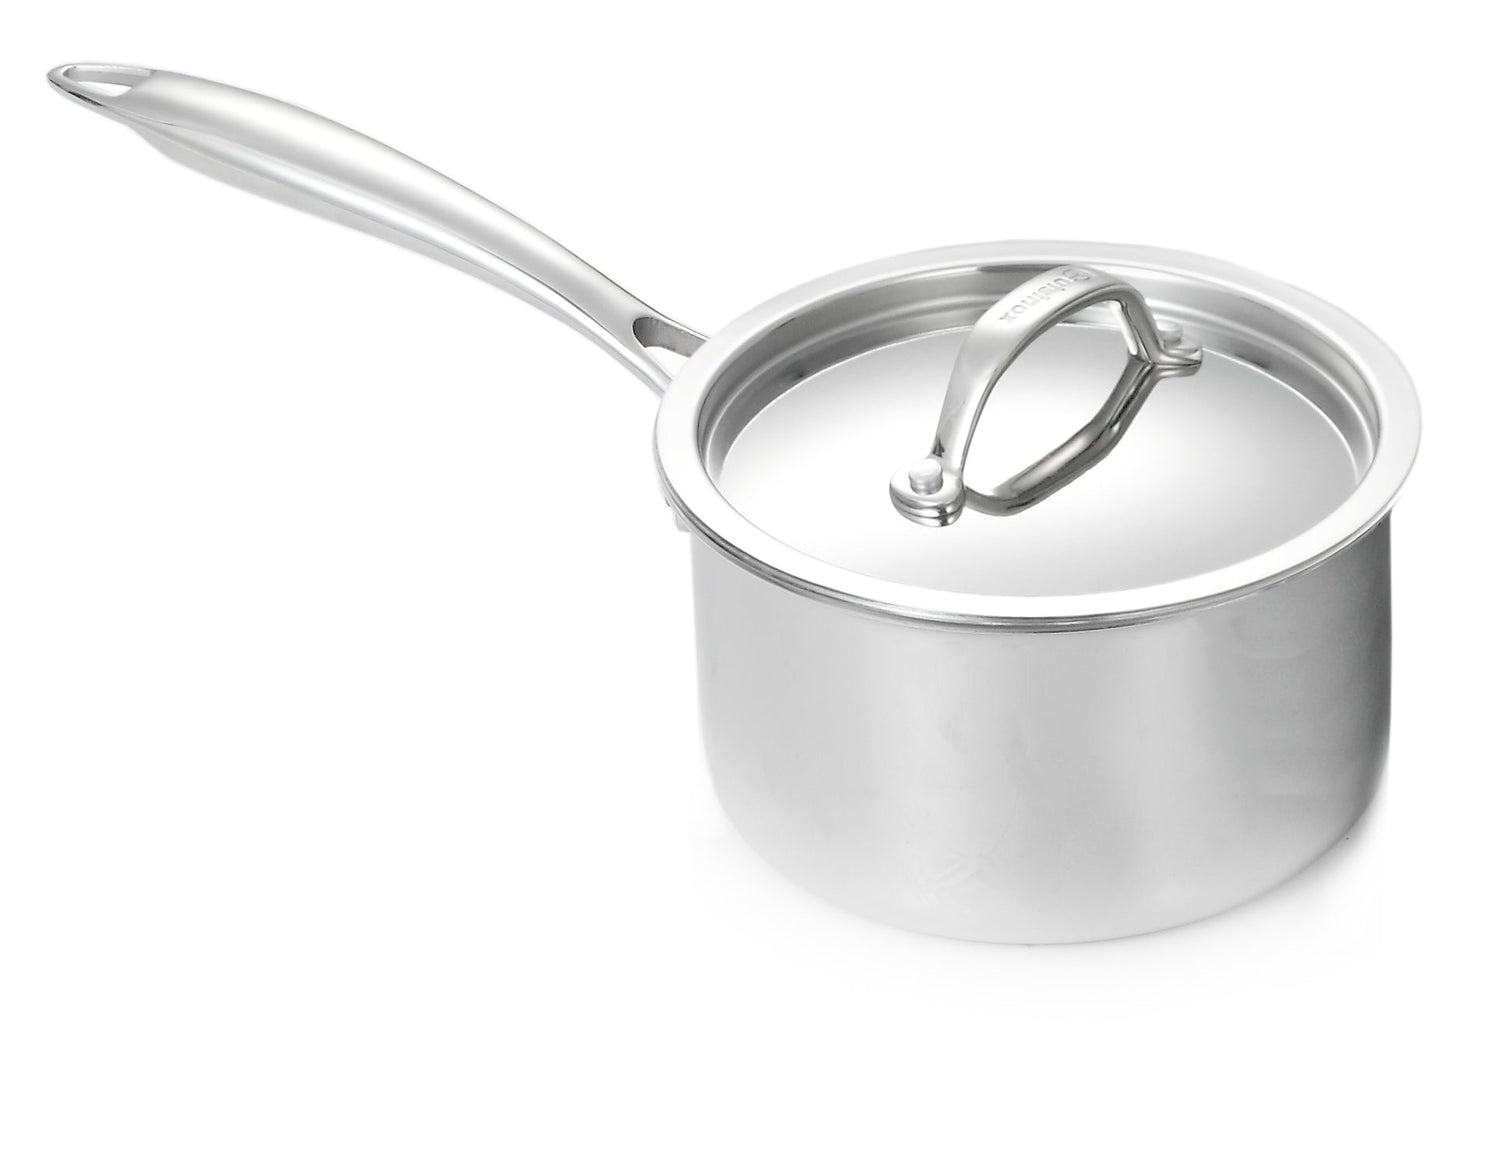 Cuisinox Elite 1.7 Liter Covered Saute Pan with Excalibur coating $120